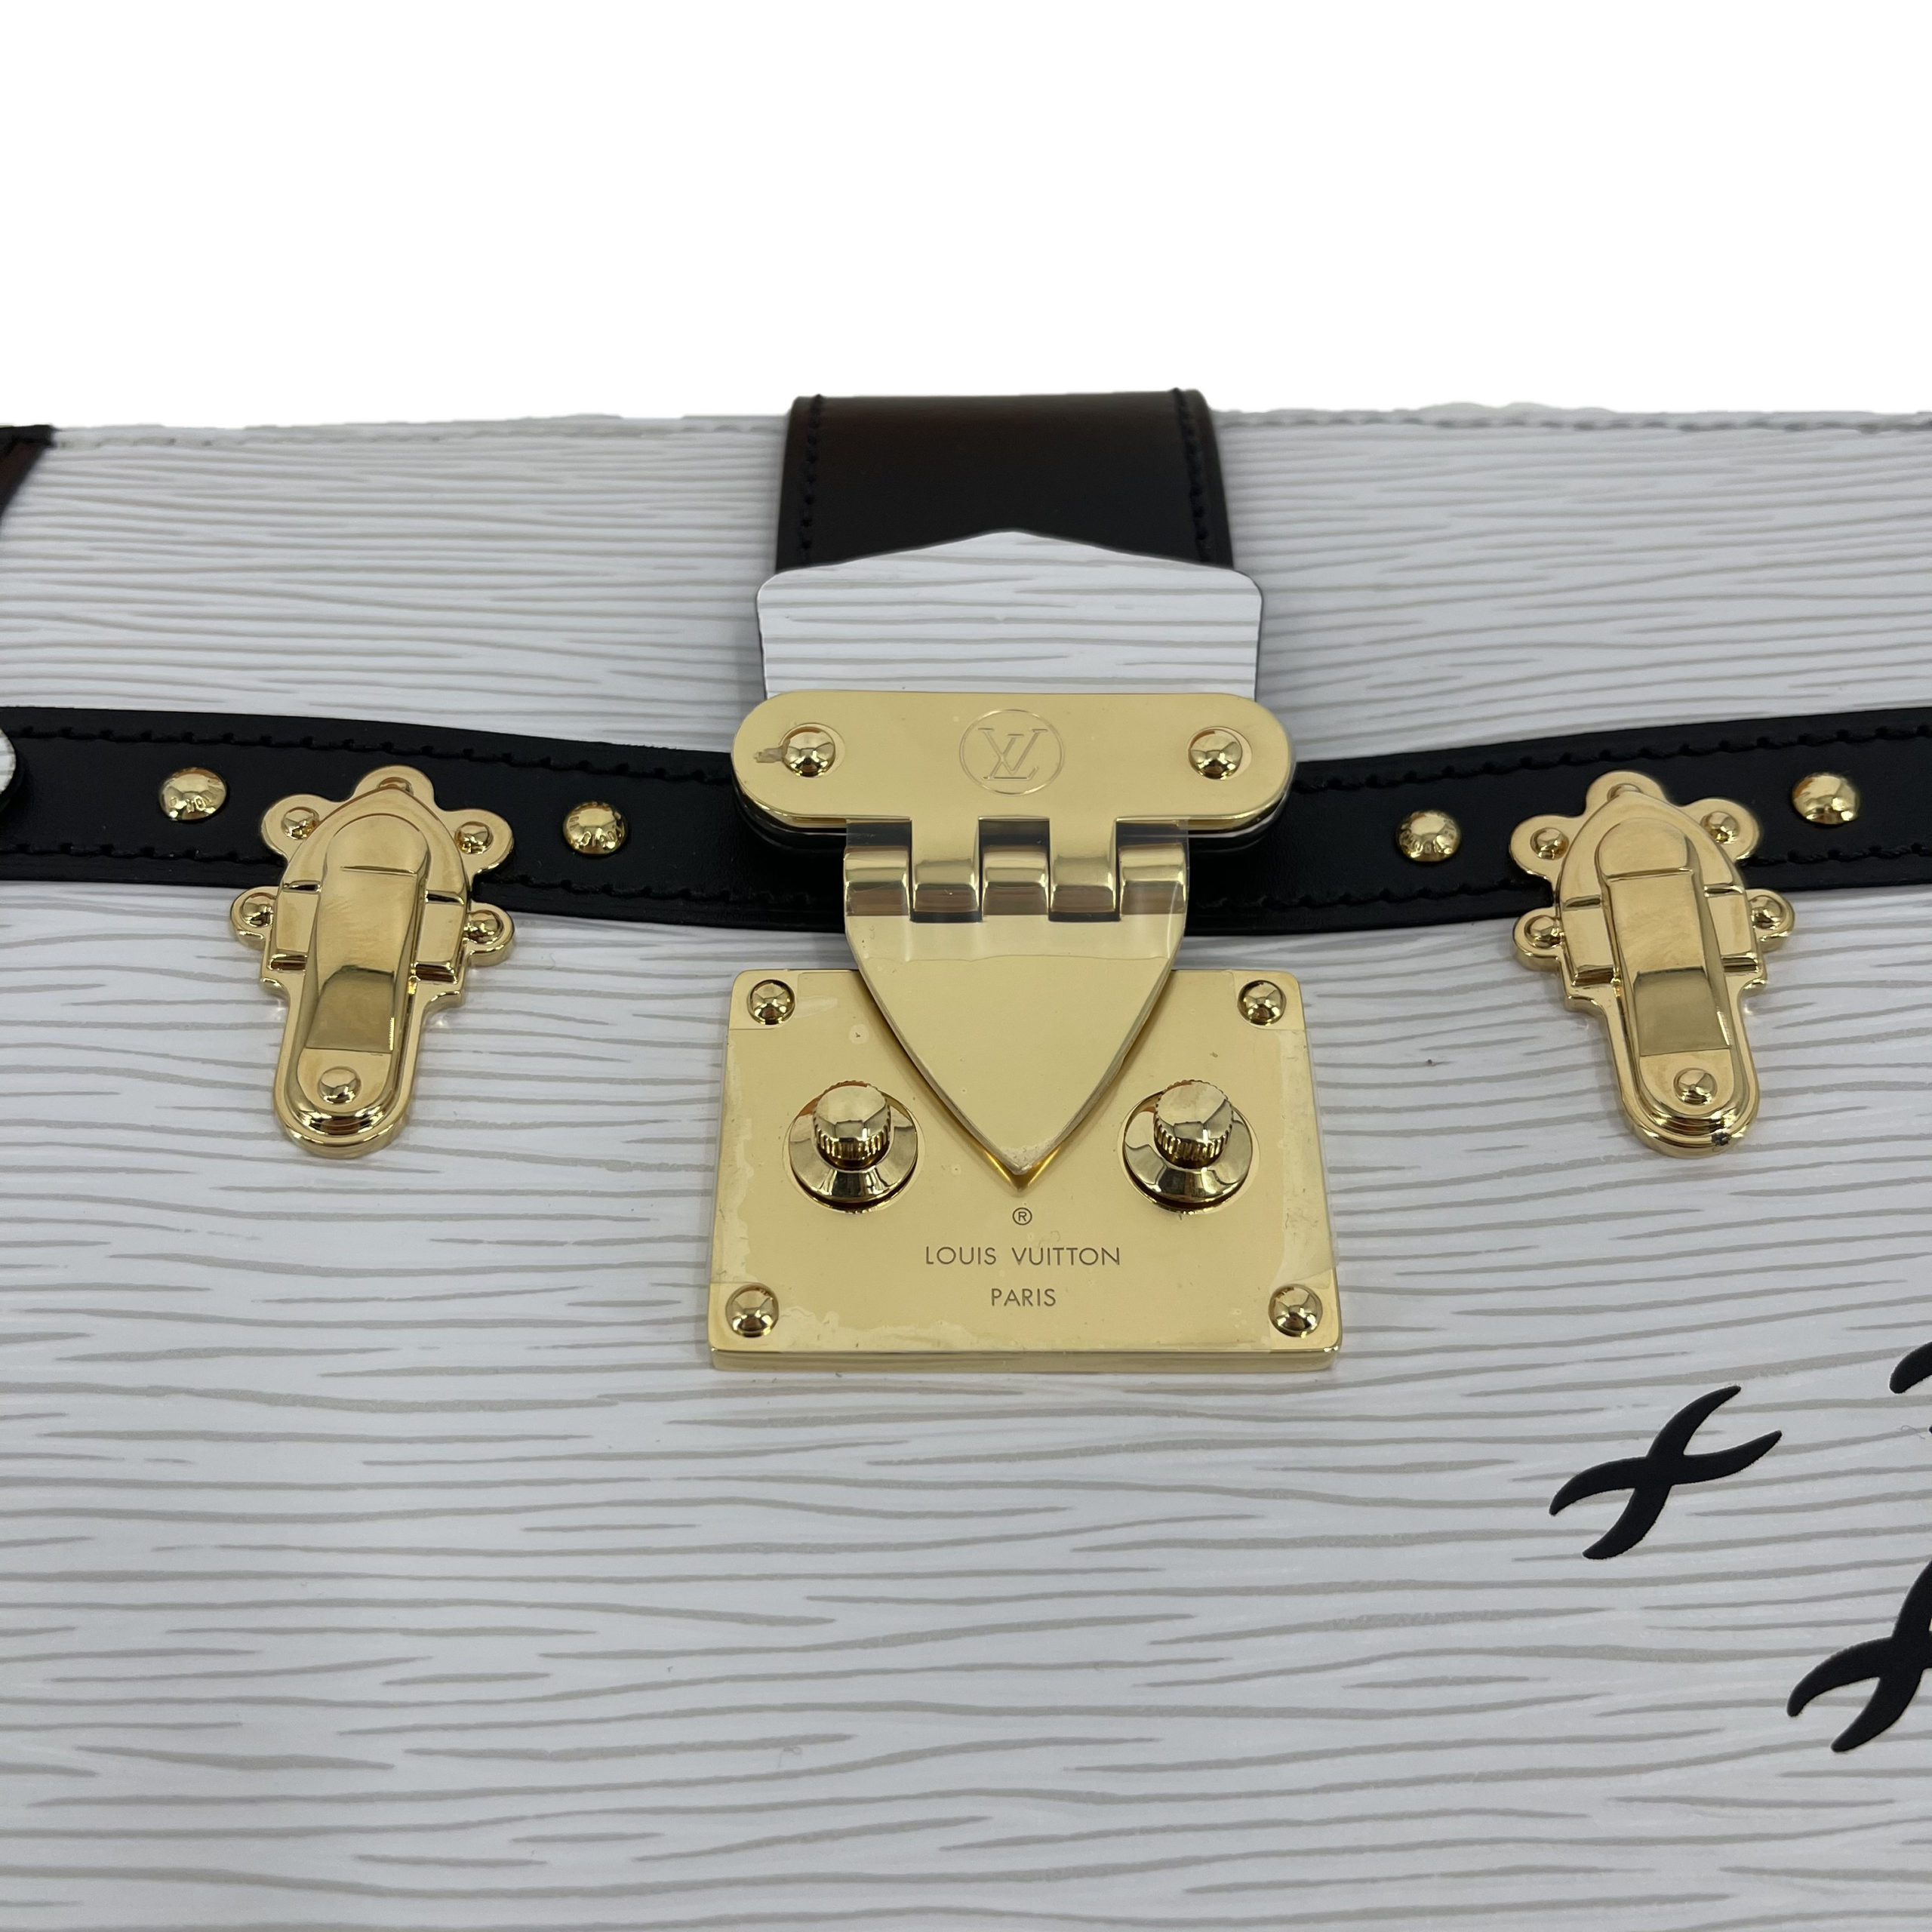 Trunk Clutch Epi Leather in White - Handbags M52151, L*V – ZAK BAGS ©️